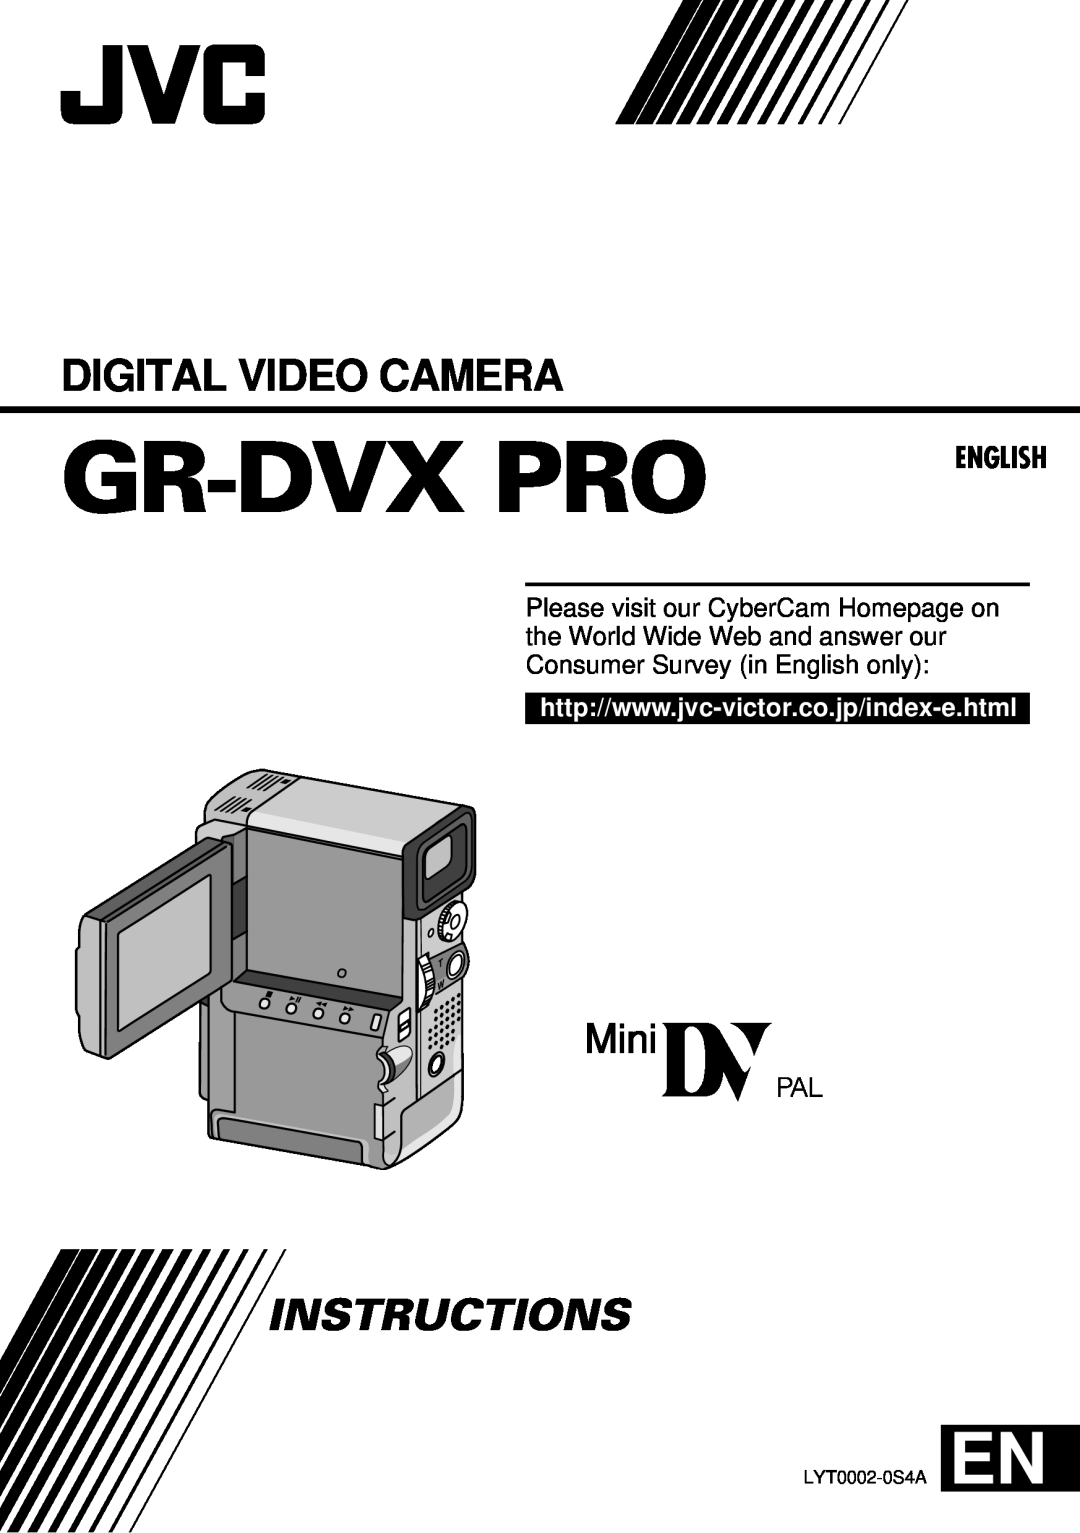 JVC manual Gr-Dvx Pro, Digital Video Camera, Instructions, English, LYT0002-0S4A EN 